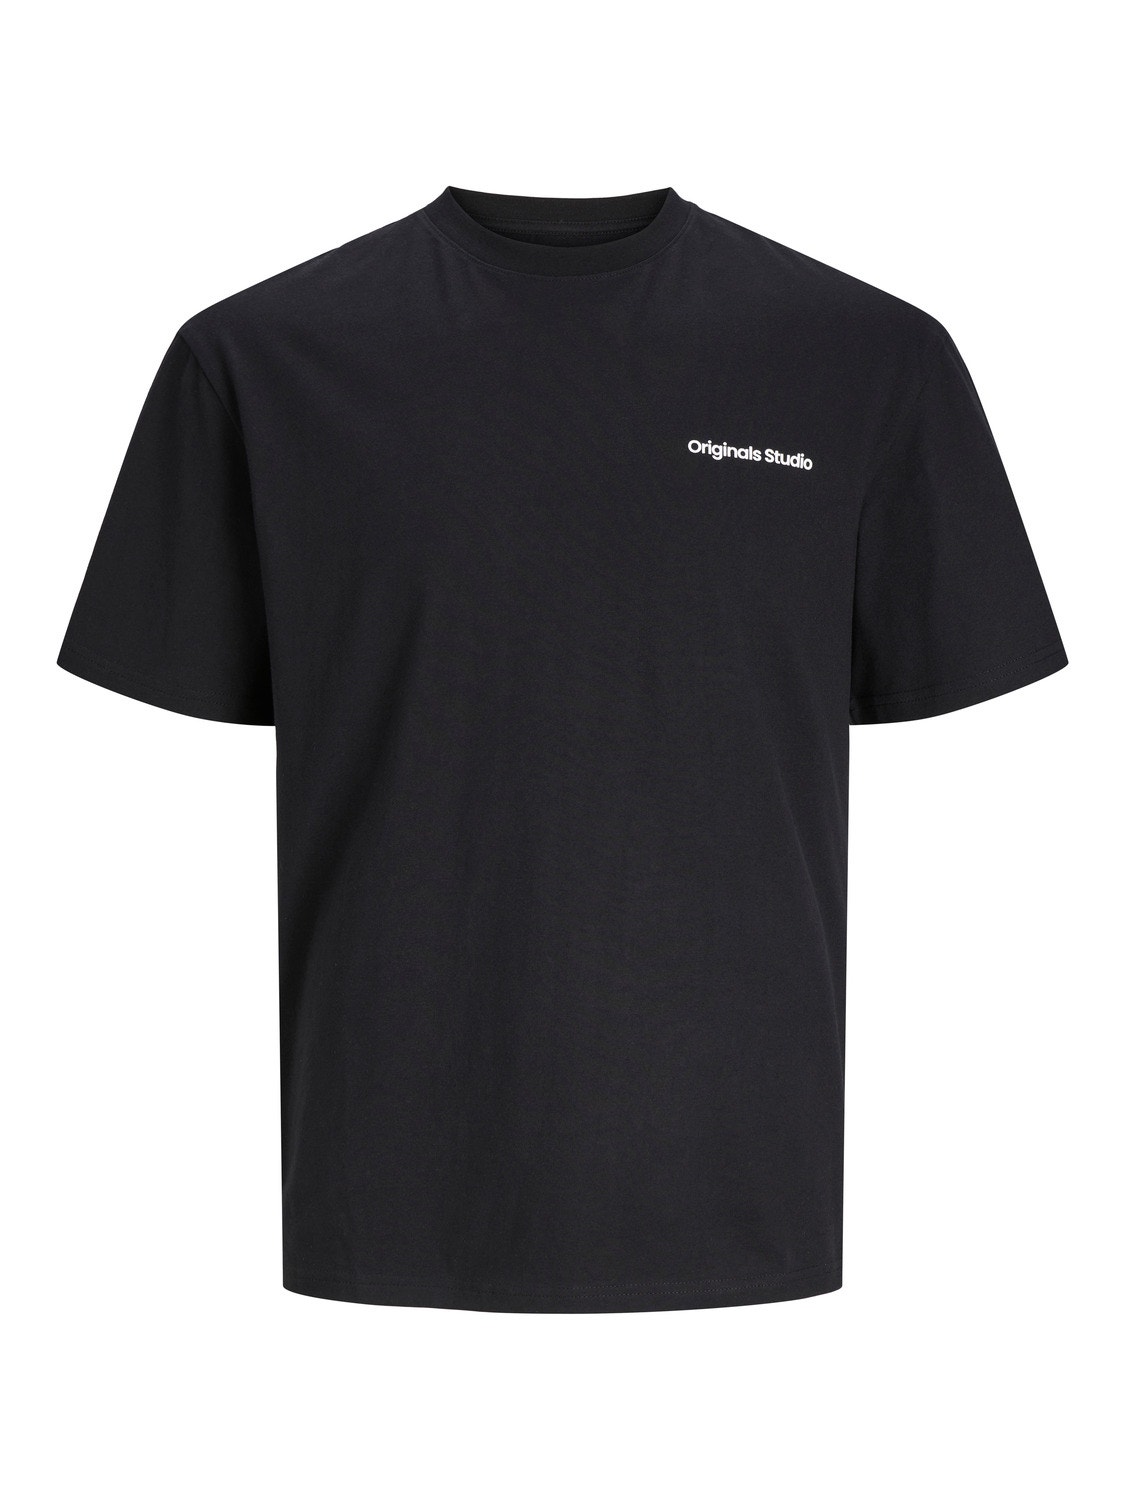 Jack & Jones T-shirt Estampar Decote Redondo -Black - 12254328